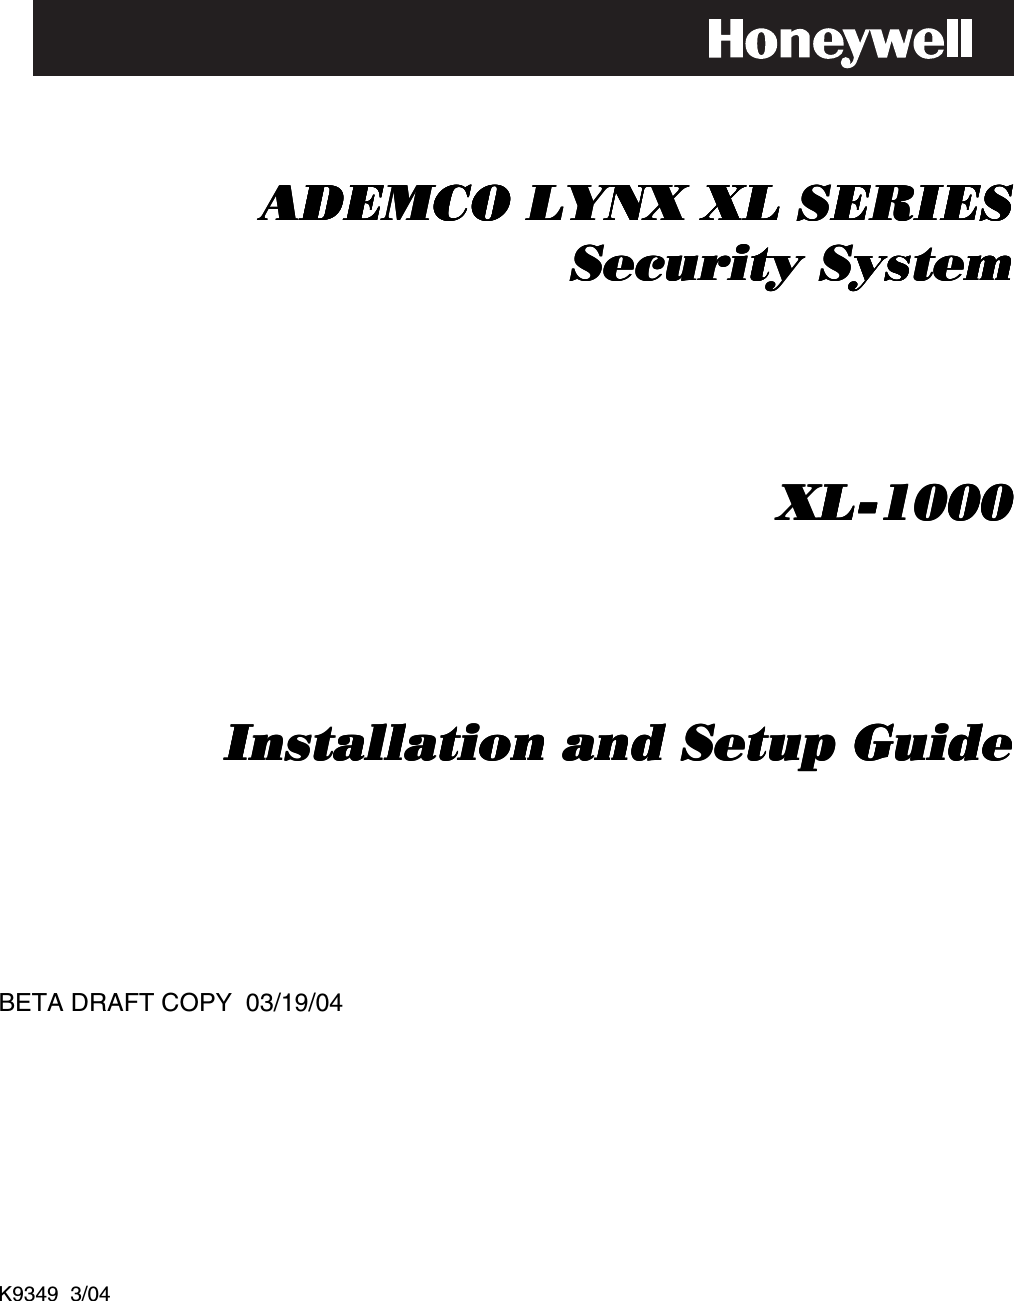         ADEMCO LYNX XL SERIESADEMCO LYNX XL SERIESADEMCO LYNX XL SERIESADEMCO LYNX XL SERIES    Security SystemSecurity SystemSecurity SystemSecurity System                XLXLXLXL----1000100010001000                Installation and Setup GuideInstallation and Setup GuideInstallation and Setup GuideInstallation and Setup Guide             BETA DRAFT COPY  03/19/04            K9349  3/04  